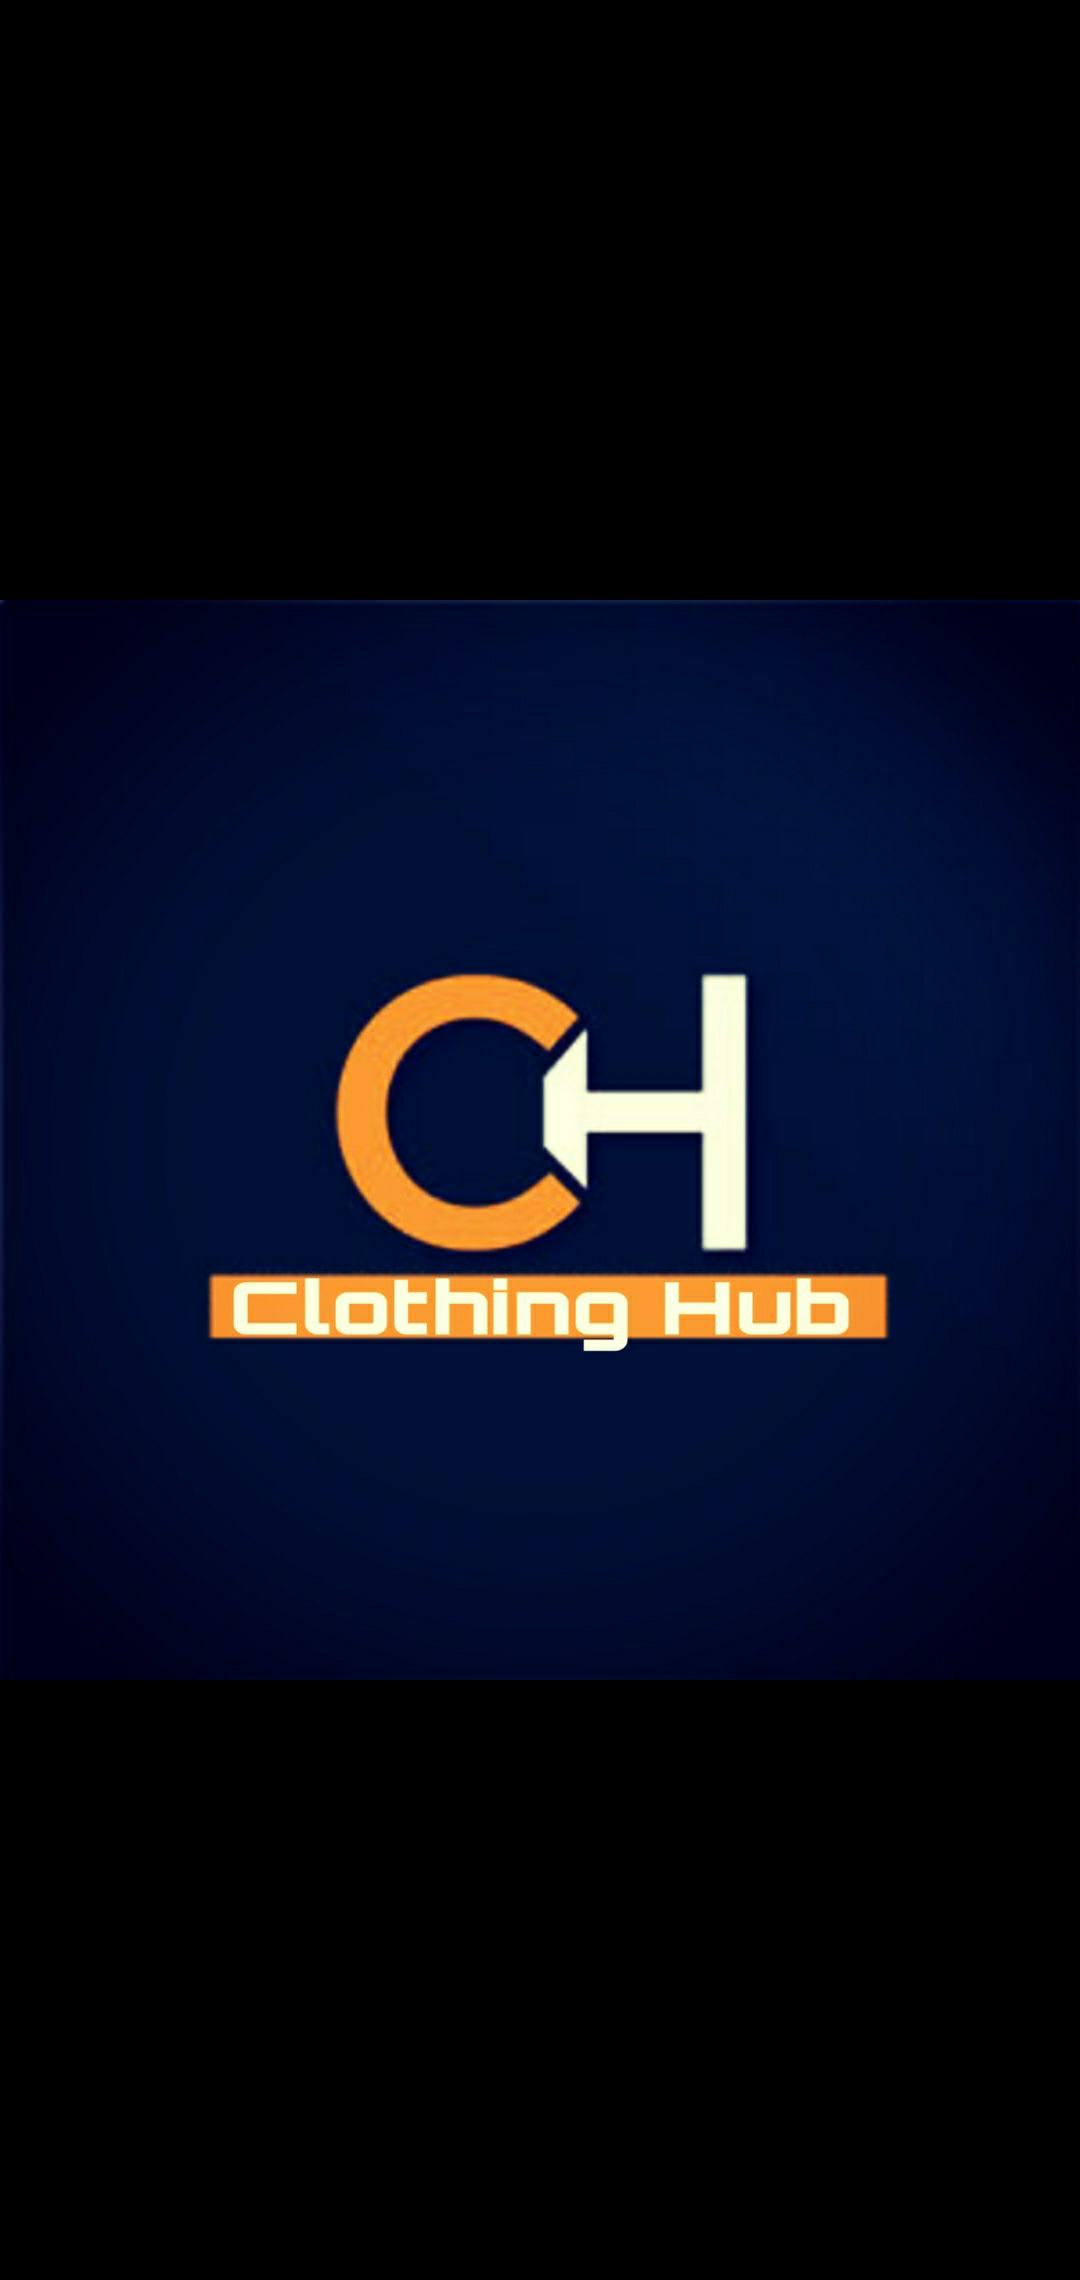 Online Clothing Hub